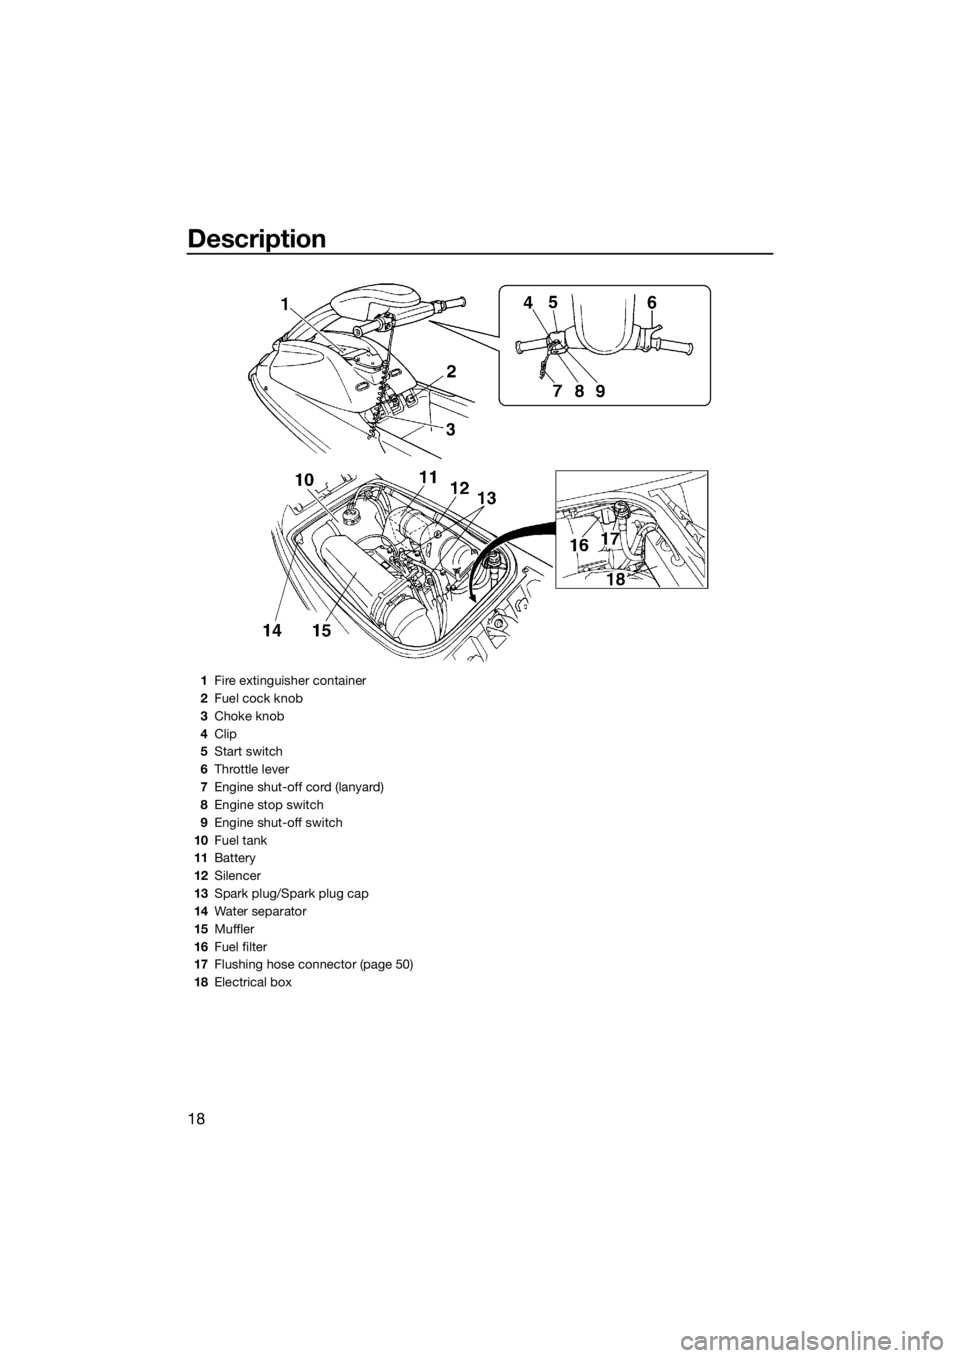 YAMAHA SUPERJET 2019 Owners Manual Description
18
1Fire extinguisher container
2Fuel cock knob
3Choke knob
4Clip
5Start switch
6Throttle lever
7Engine shut-off cord (lanyard)
8Engine stop switch
9Engine shut-off switch
10Fuel tank
11Ba